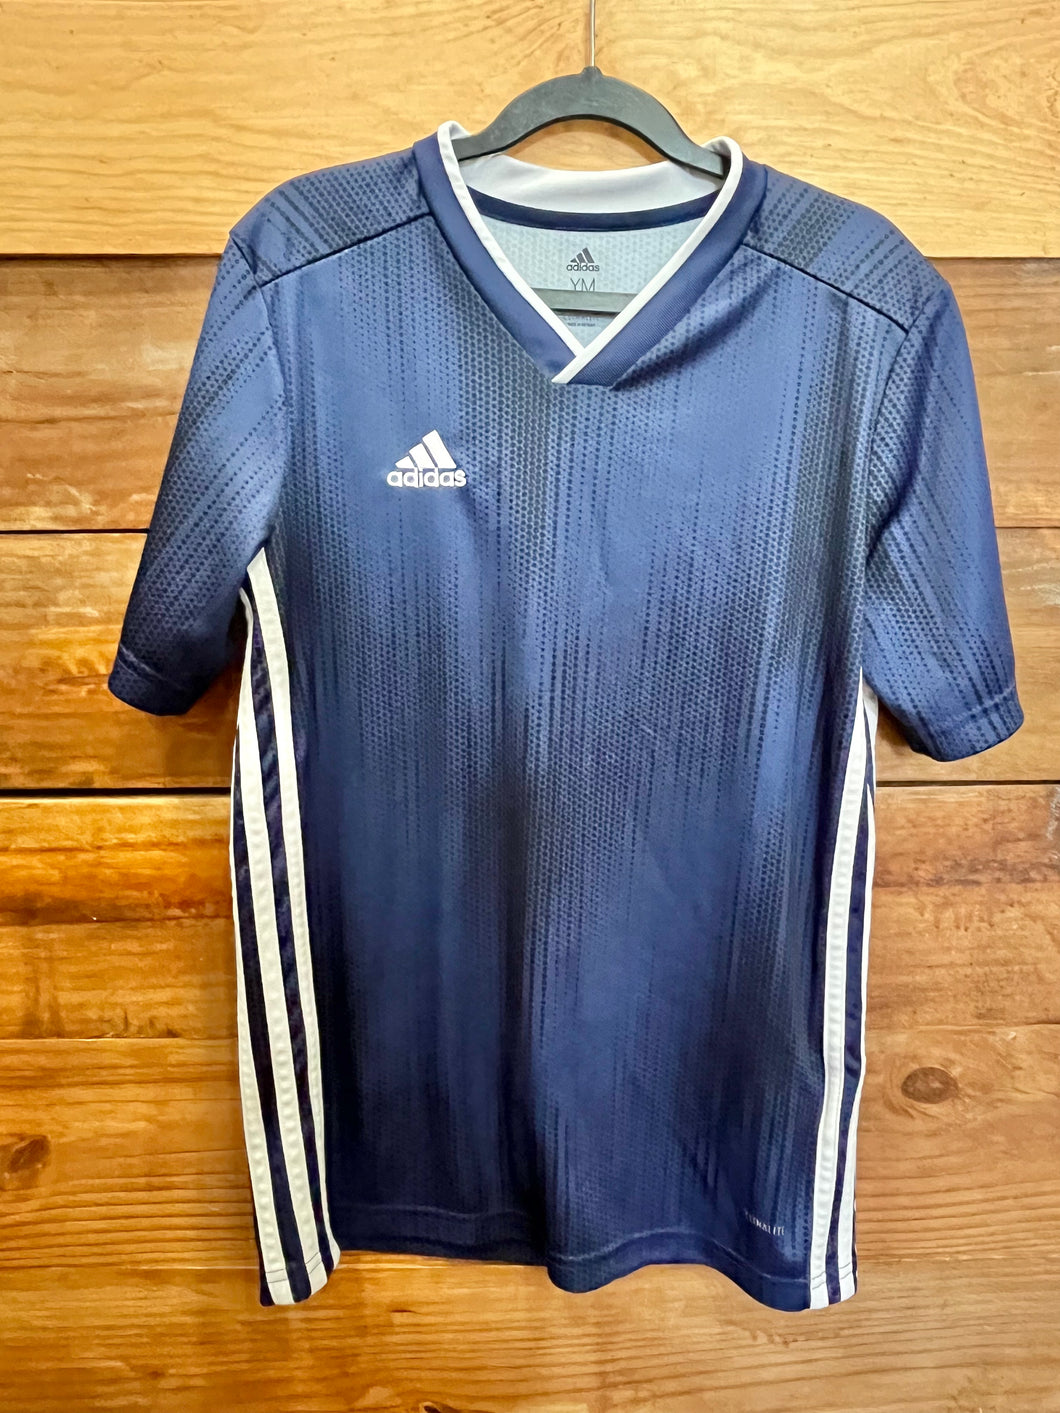 Adidas Blue Shirt Size 11